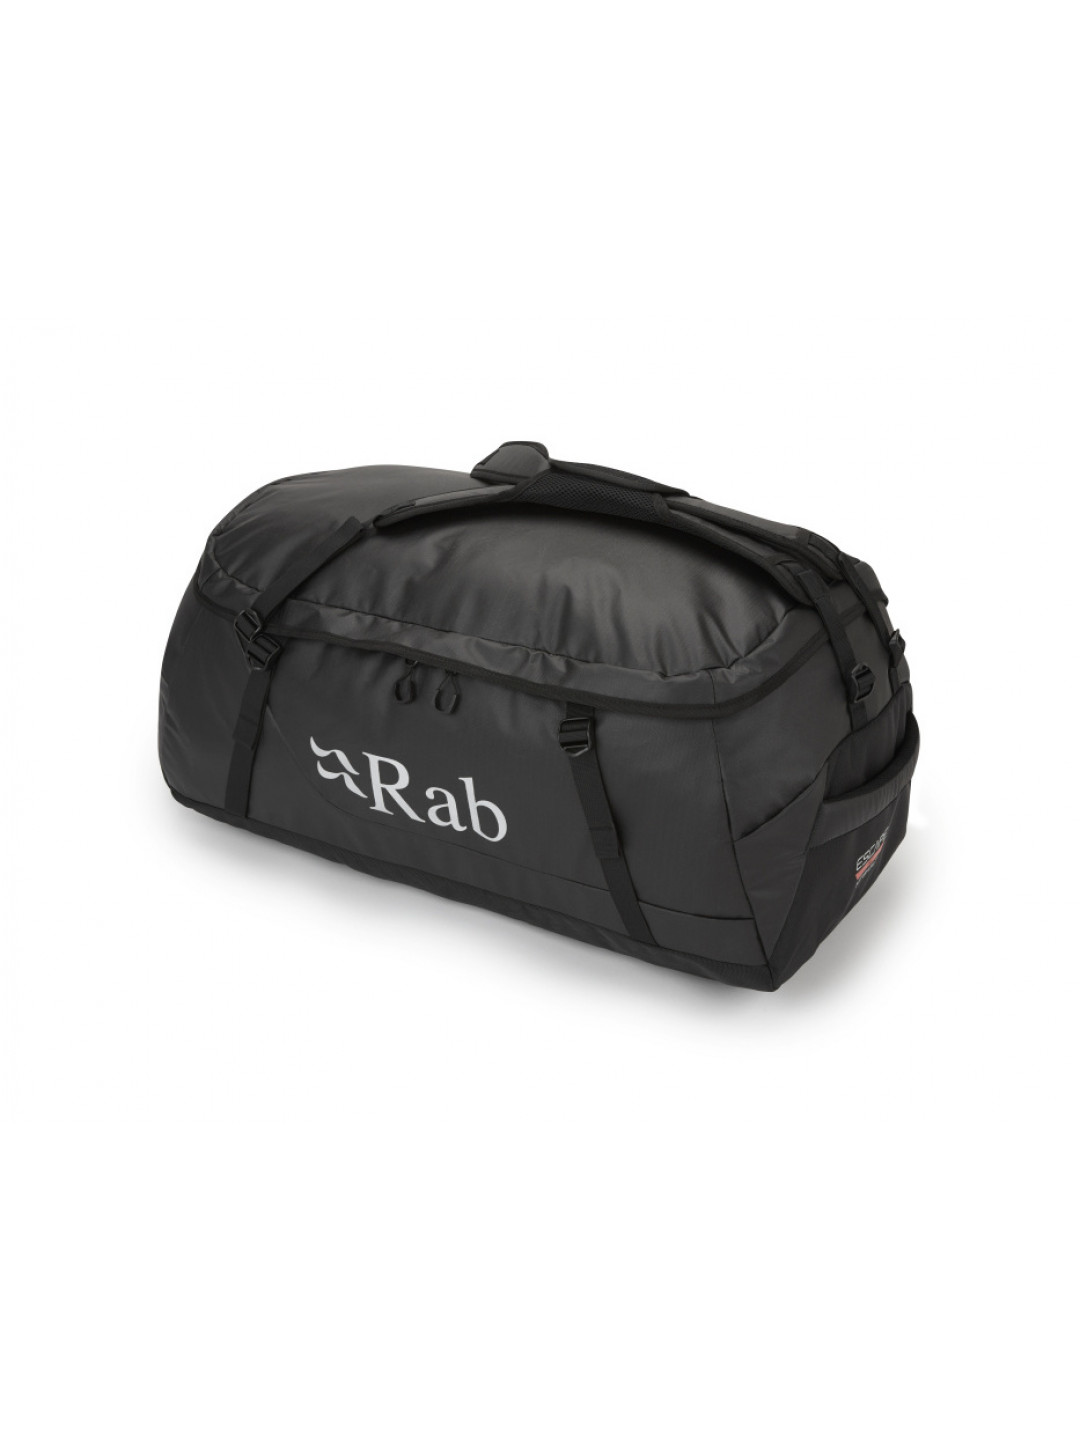 Rab Escape Kit Bag LT 90 Black